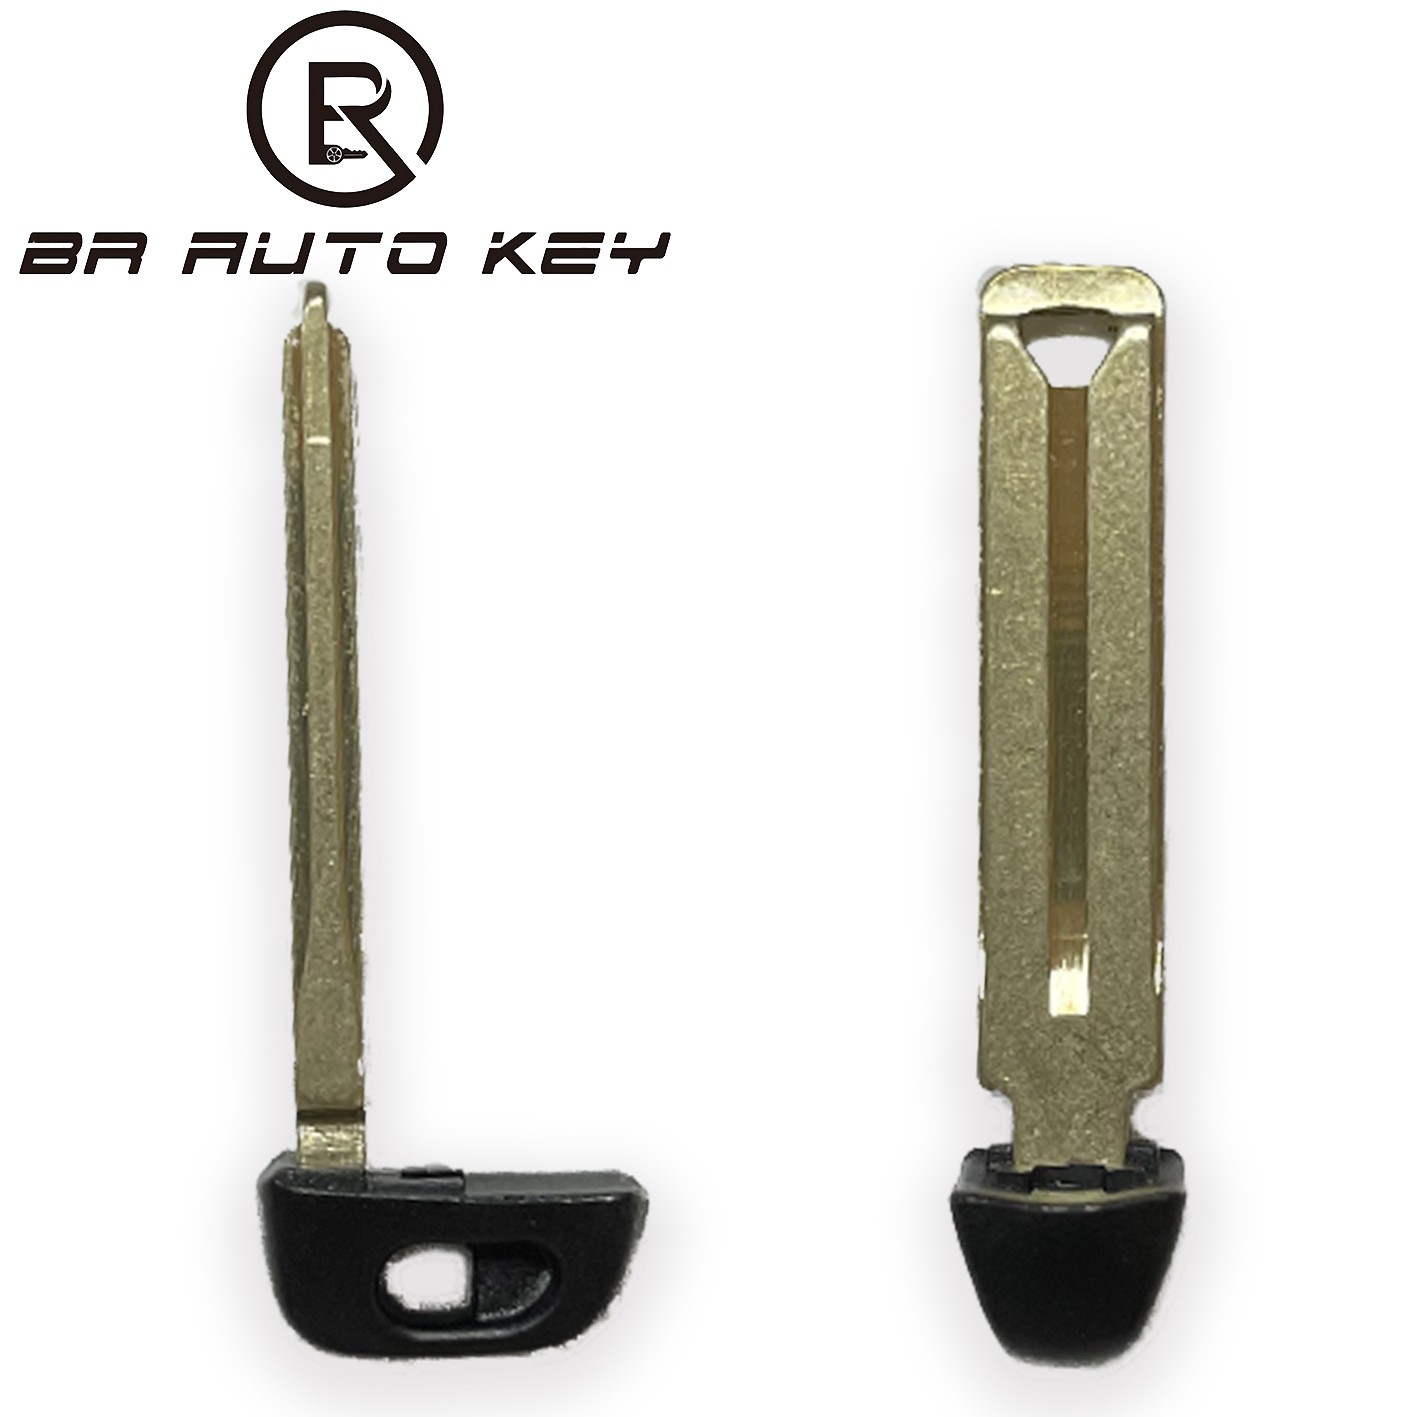 Smart Remote Key Fob For Toyota Corolla Rav4 Auris Rav4 2006-2012 Key 2 Buttons, B90EA P1 98 4D-67, Dst80 433MHz ASK 89904-12170